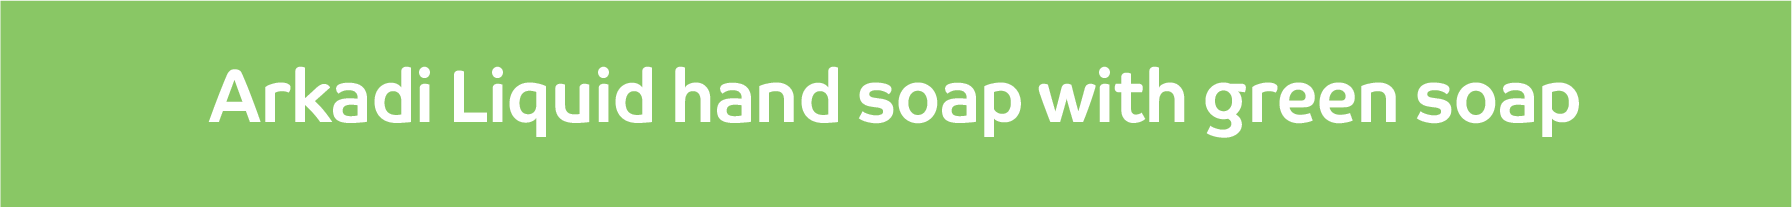 Arkadi Liquid Hand Soap with Green Soap